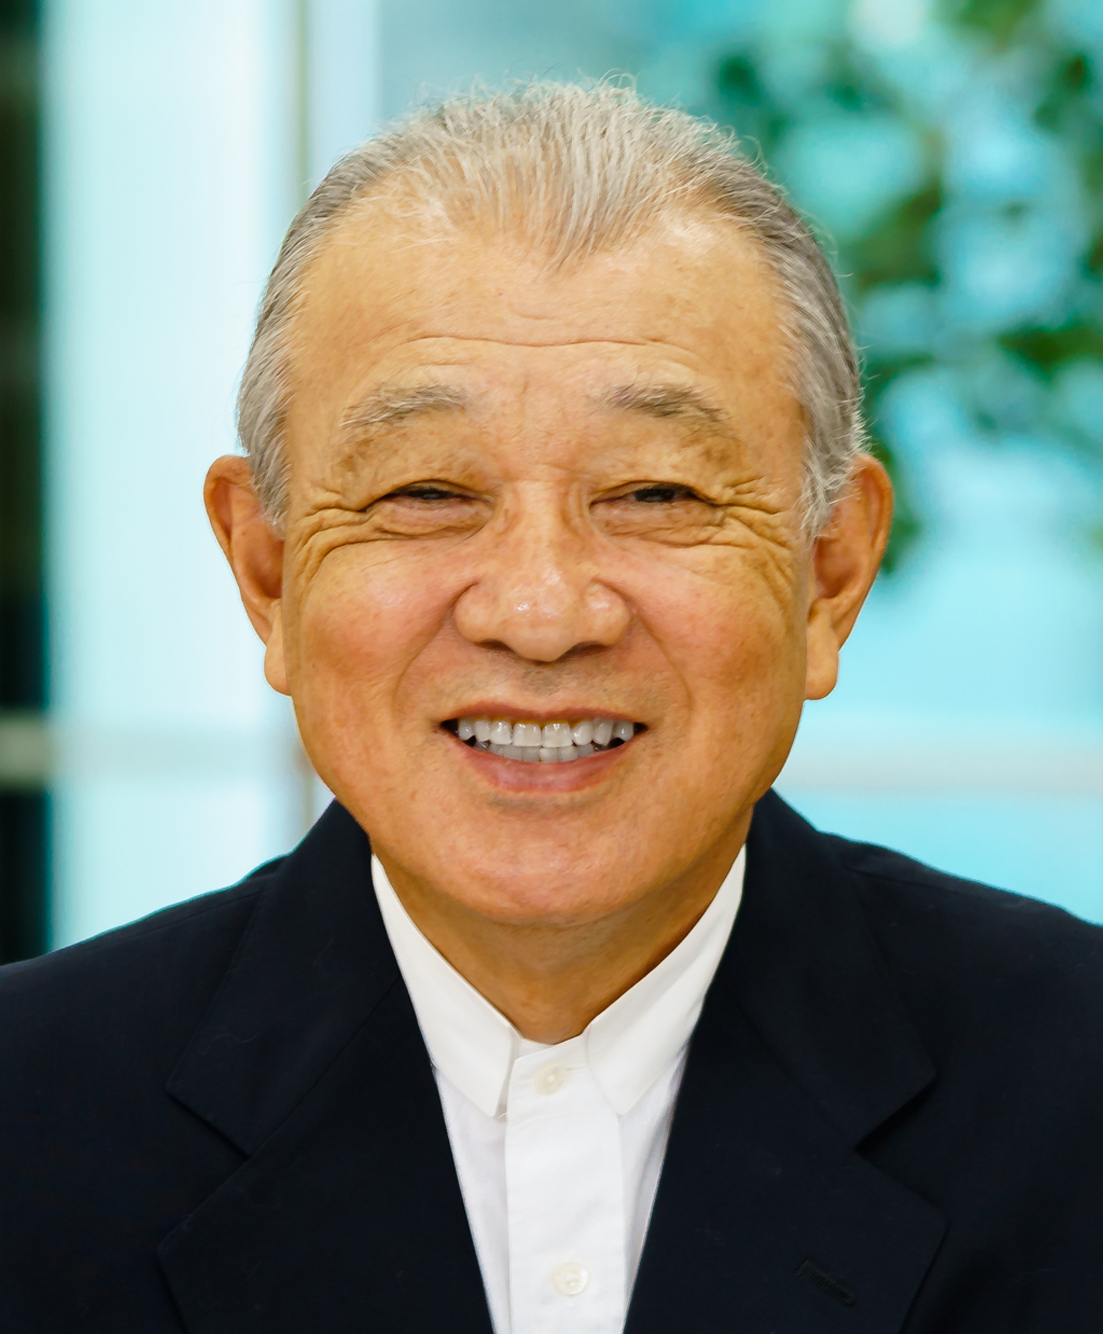 Mr. Yohei Sasakawa